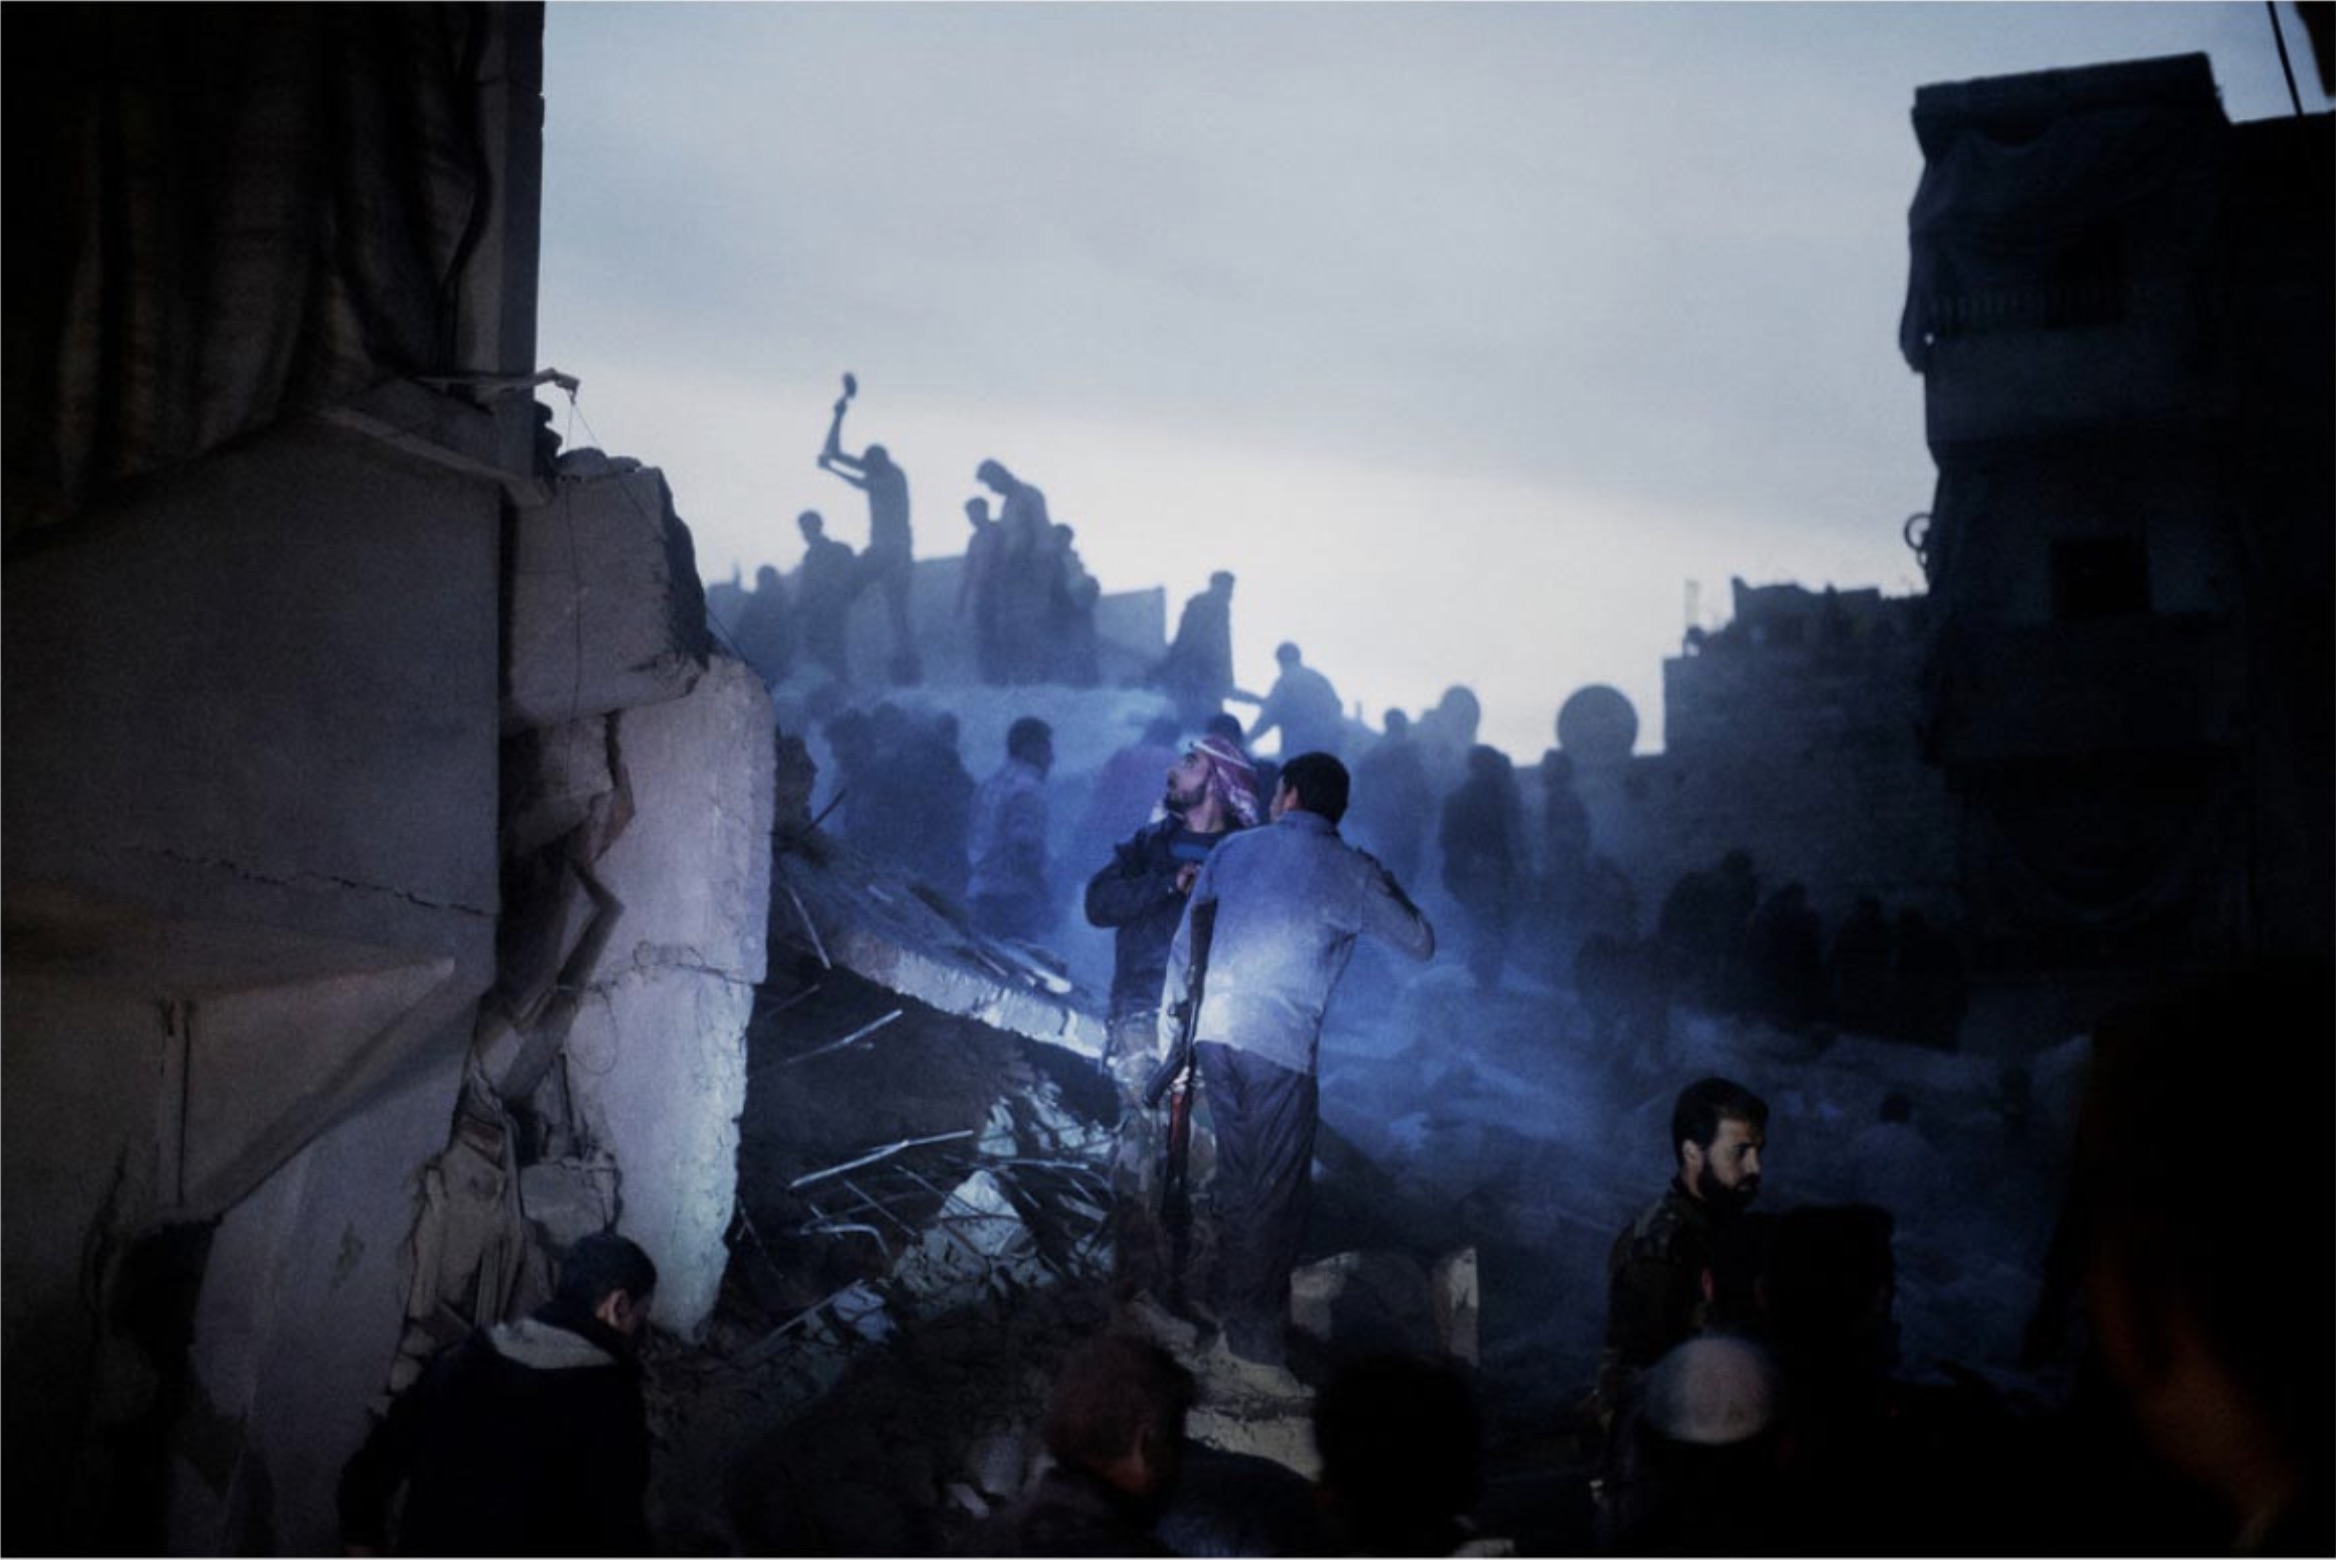 Moises Saman "Aleppo, Syria, 2013" Photo Print